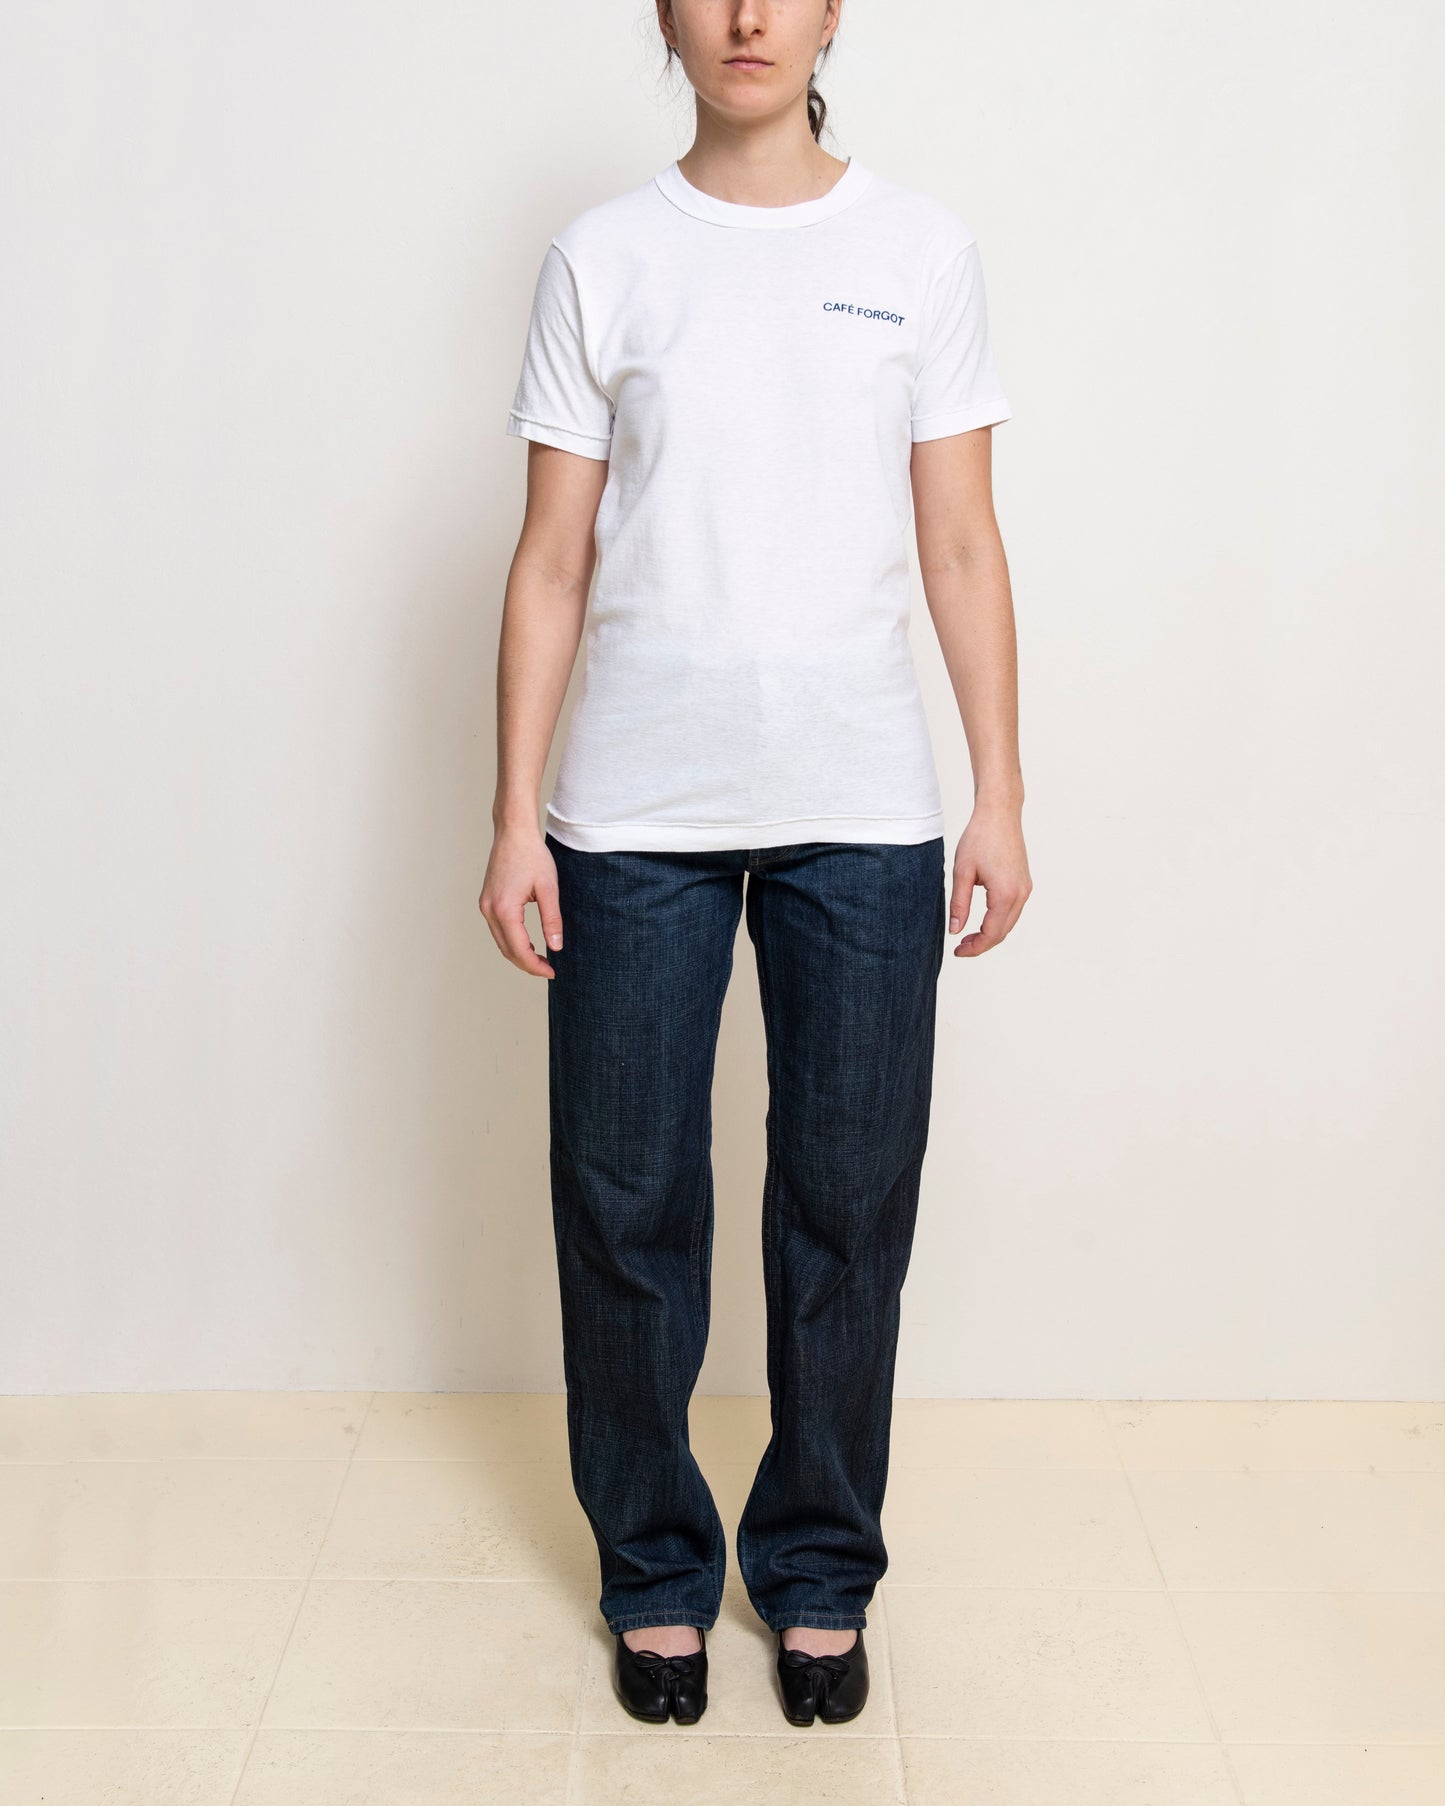 White CF T-shirt with Navy Print